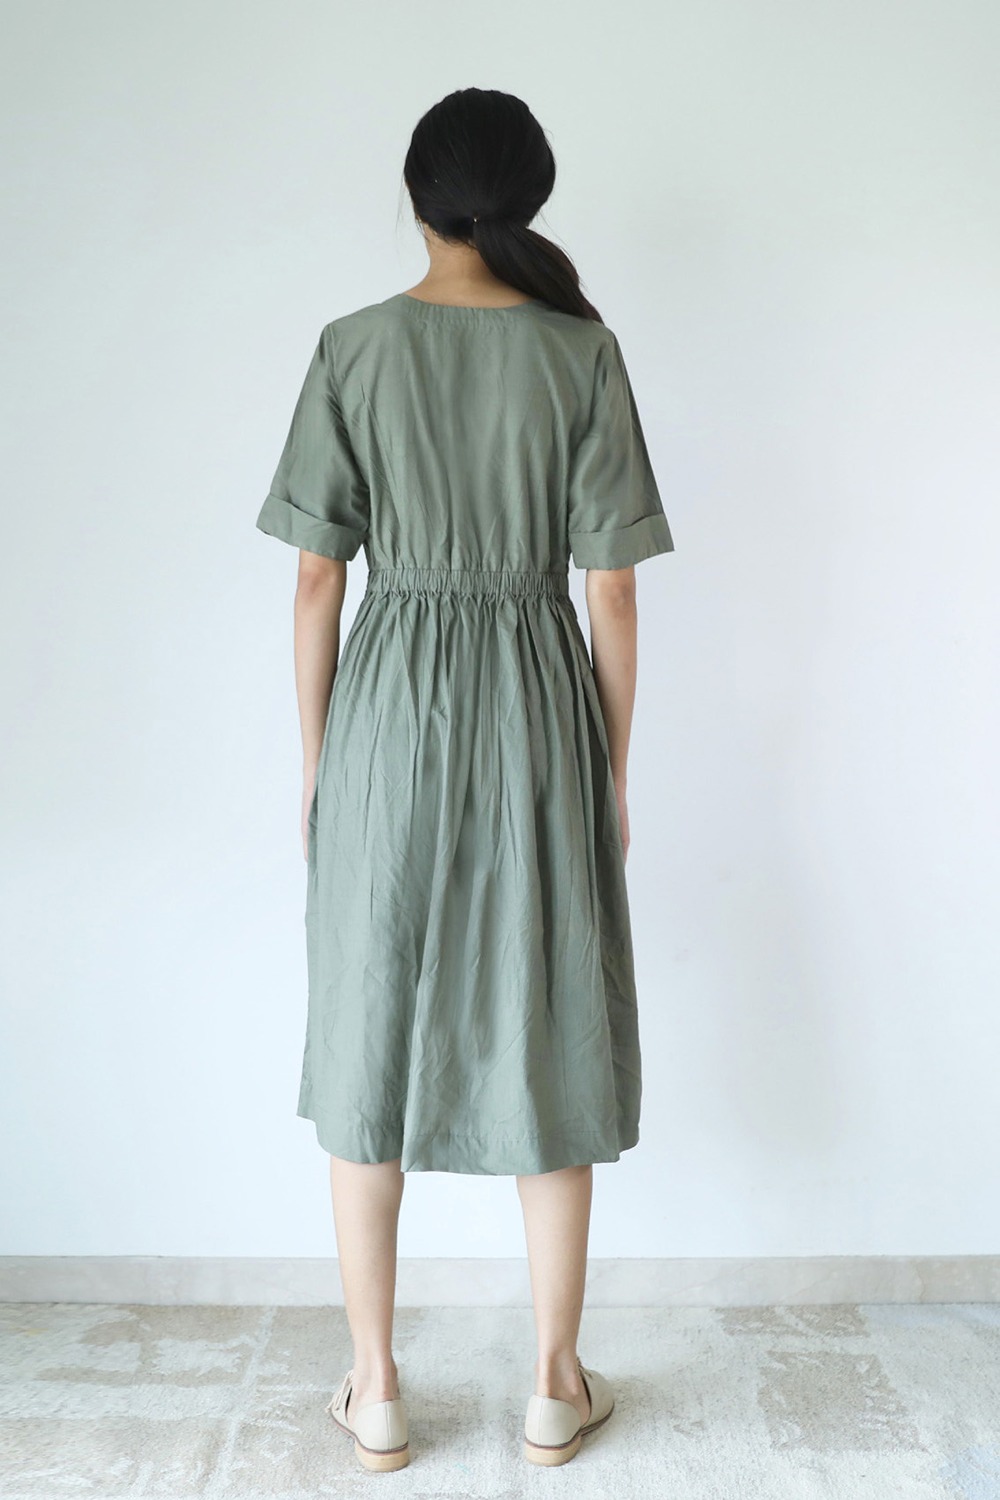 Olive Elasticated Waist Dress